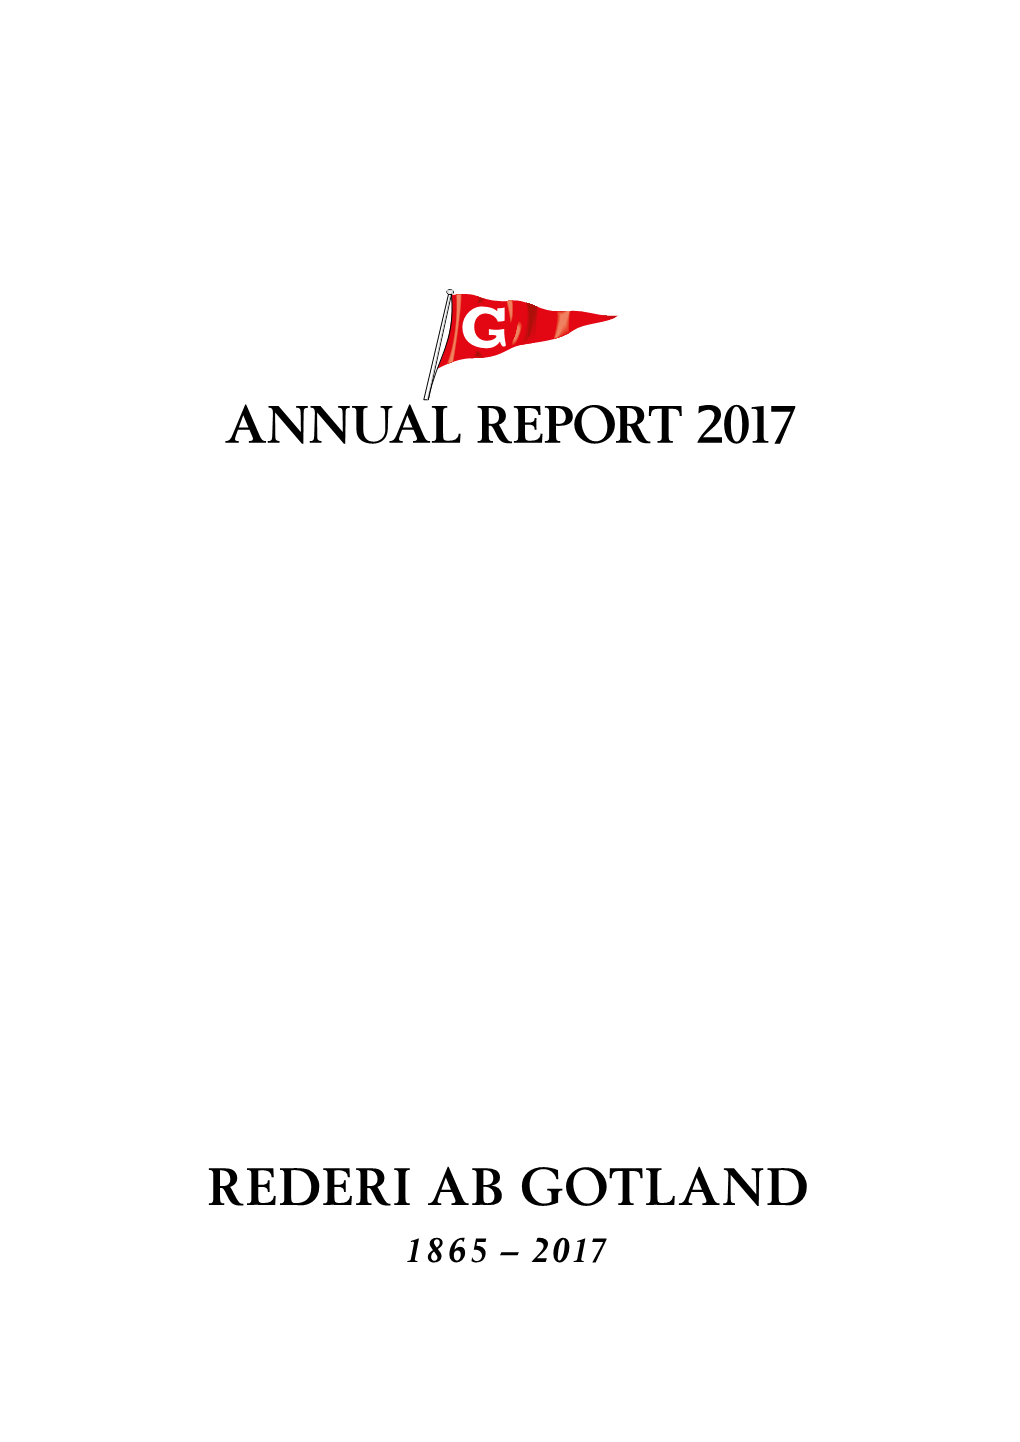 Rederi Ab Gotland Annual Report 2017